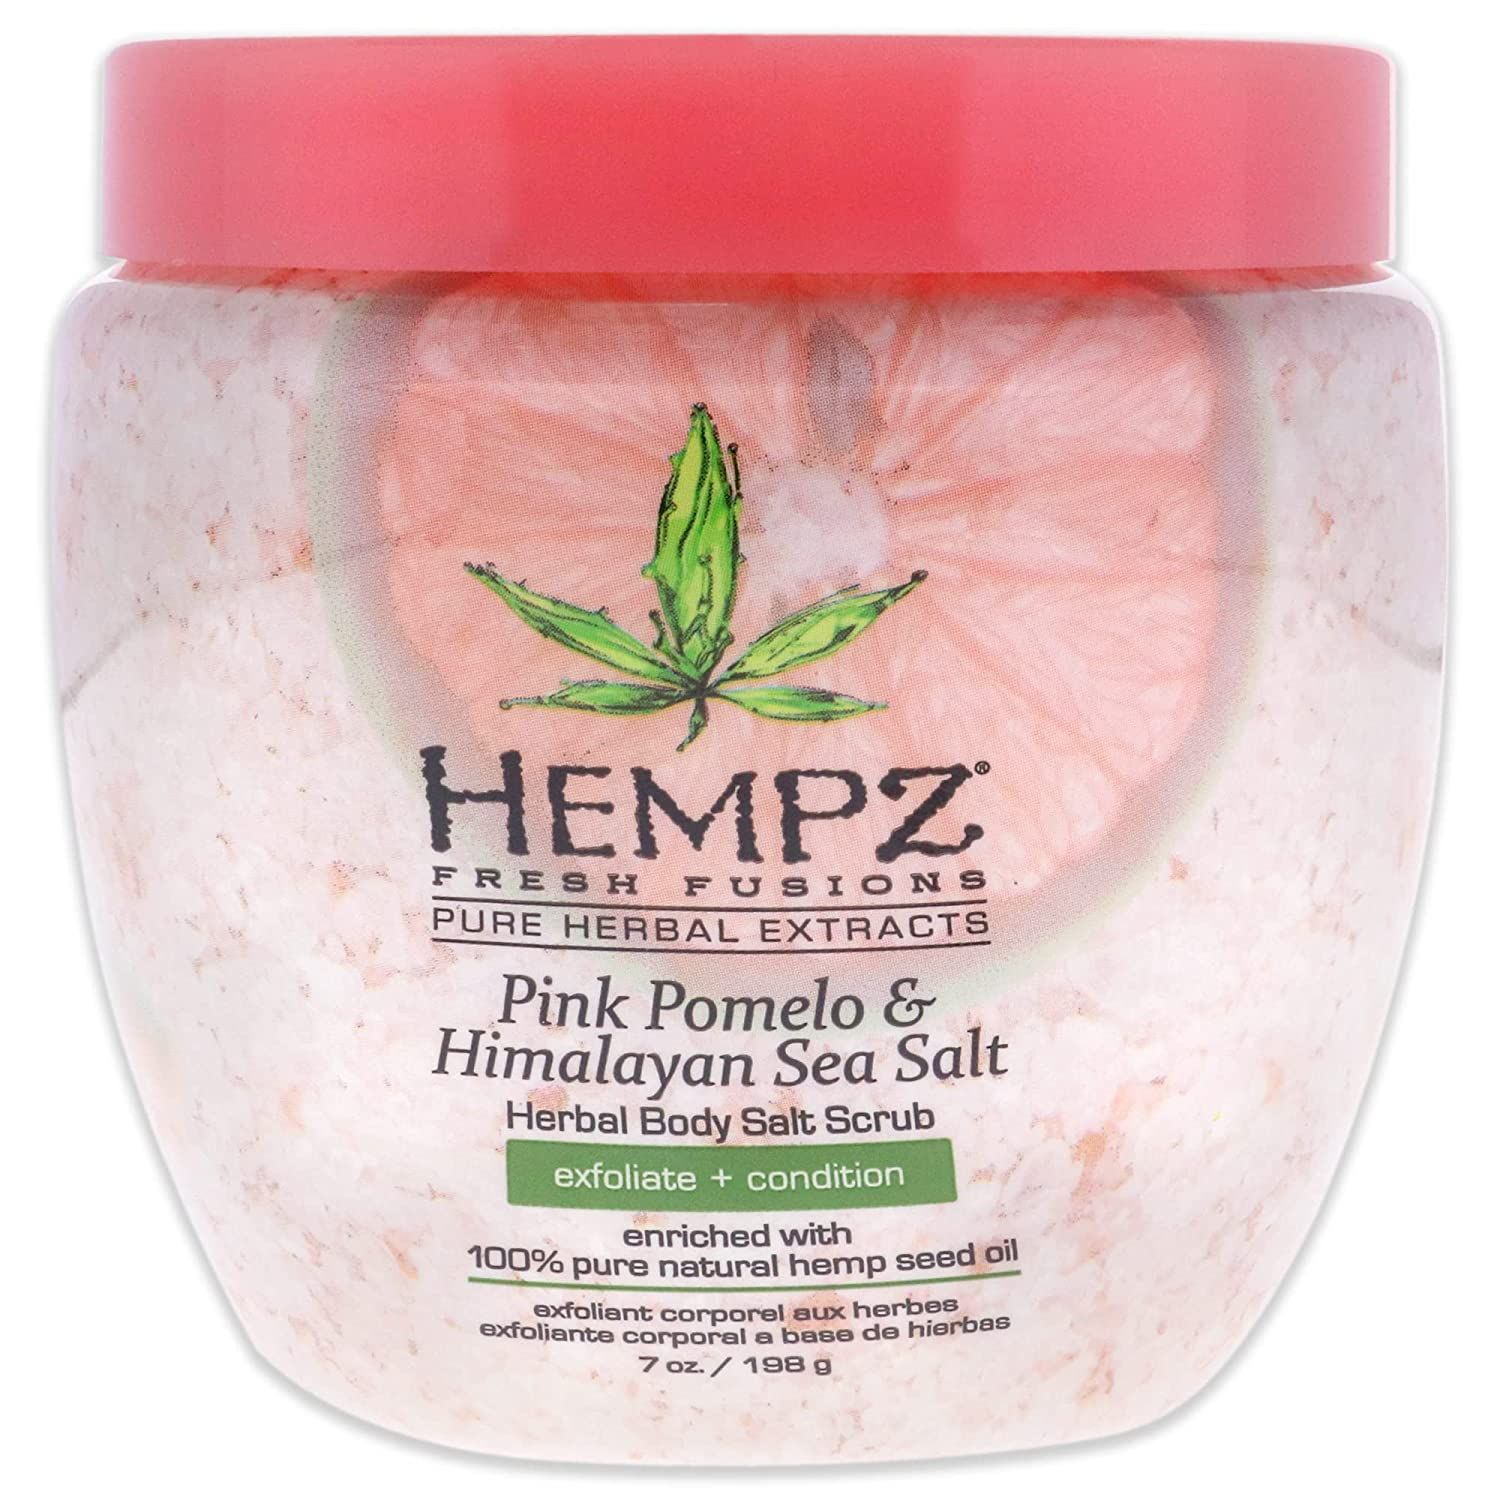 Hempz Hempz pink pomelo himalayan sea salt body scrub